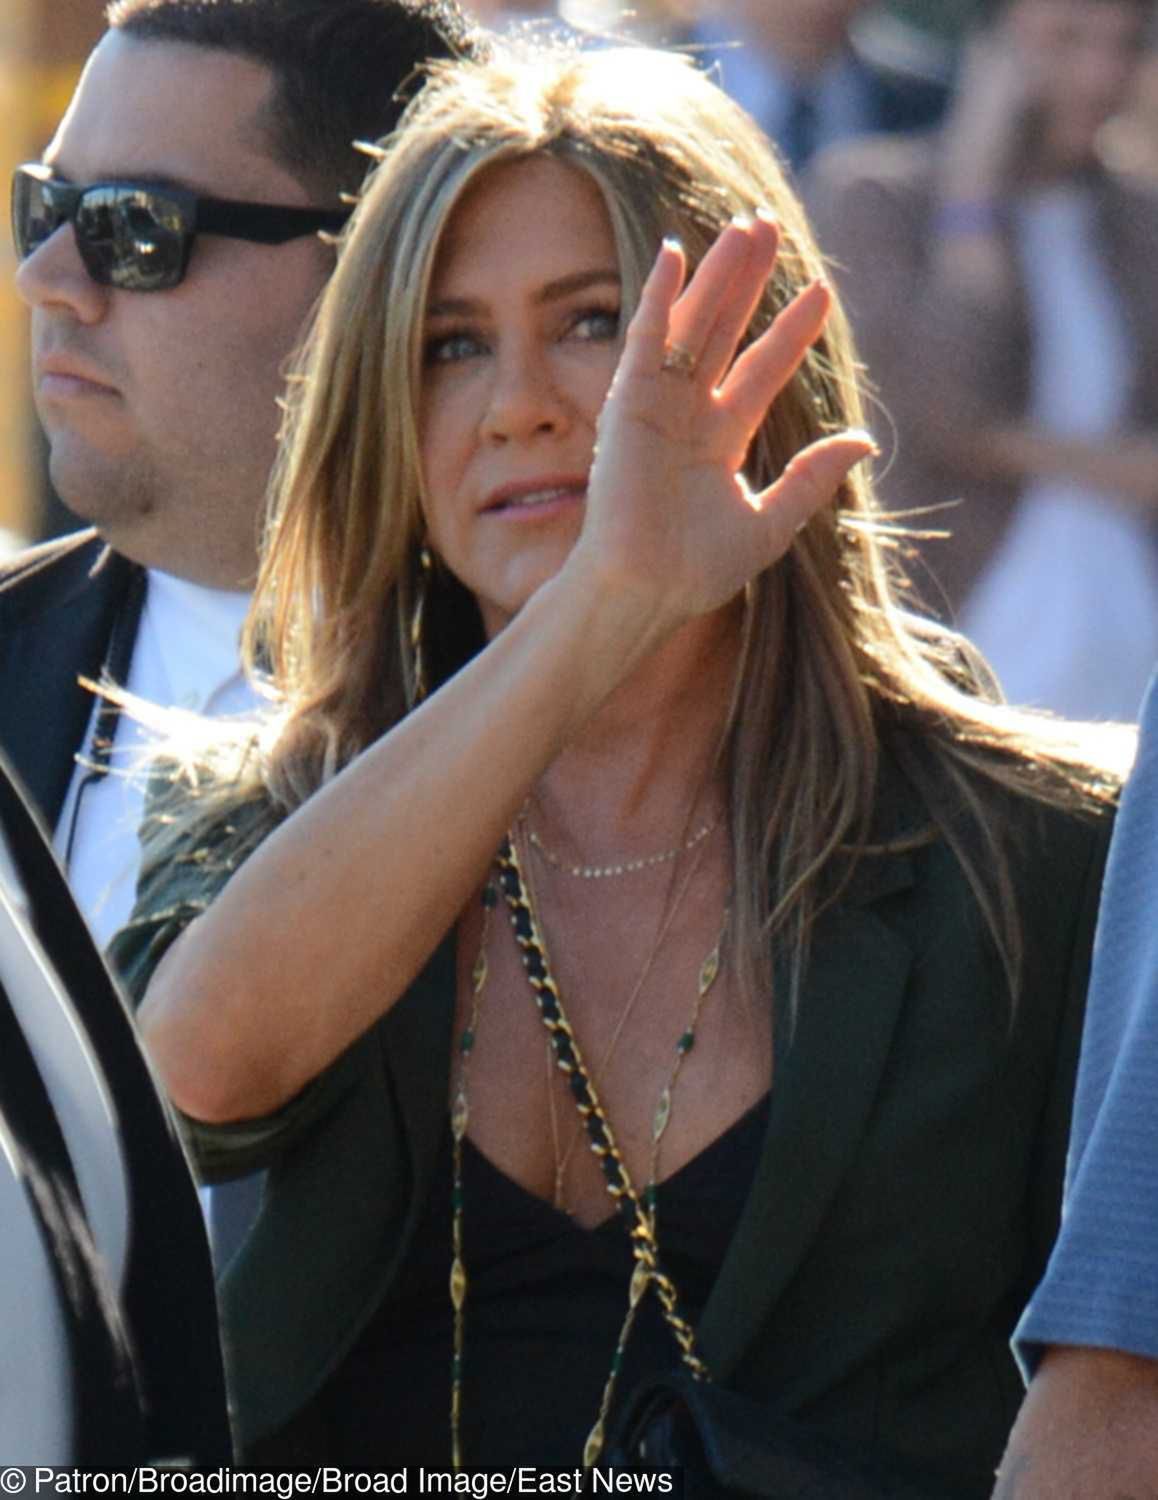 Pictured: Jennifer Aniston Mandatory Credit ?? Patron/Broadimage Jennifer Aniston arriving at Jimmy Kimmel Live!  5/30/19, Hollywood, California, United States of America  Broadimage Newswire Los Angeles 1+  (310) 301-1027 New York      1+  (646) 827-9134 sales@broadimage.com http://www.broadimage.com